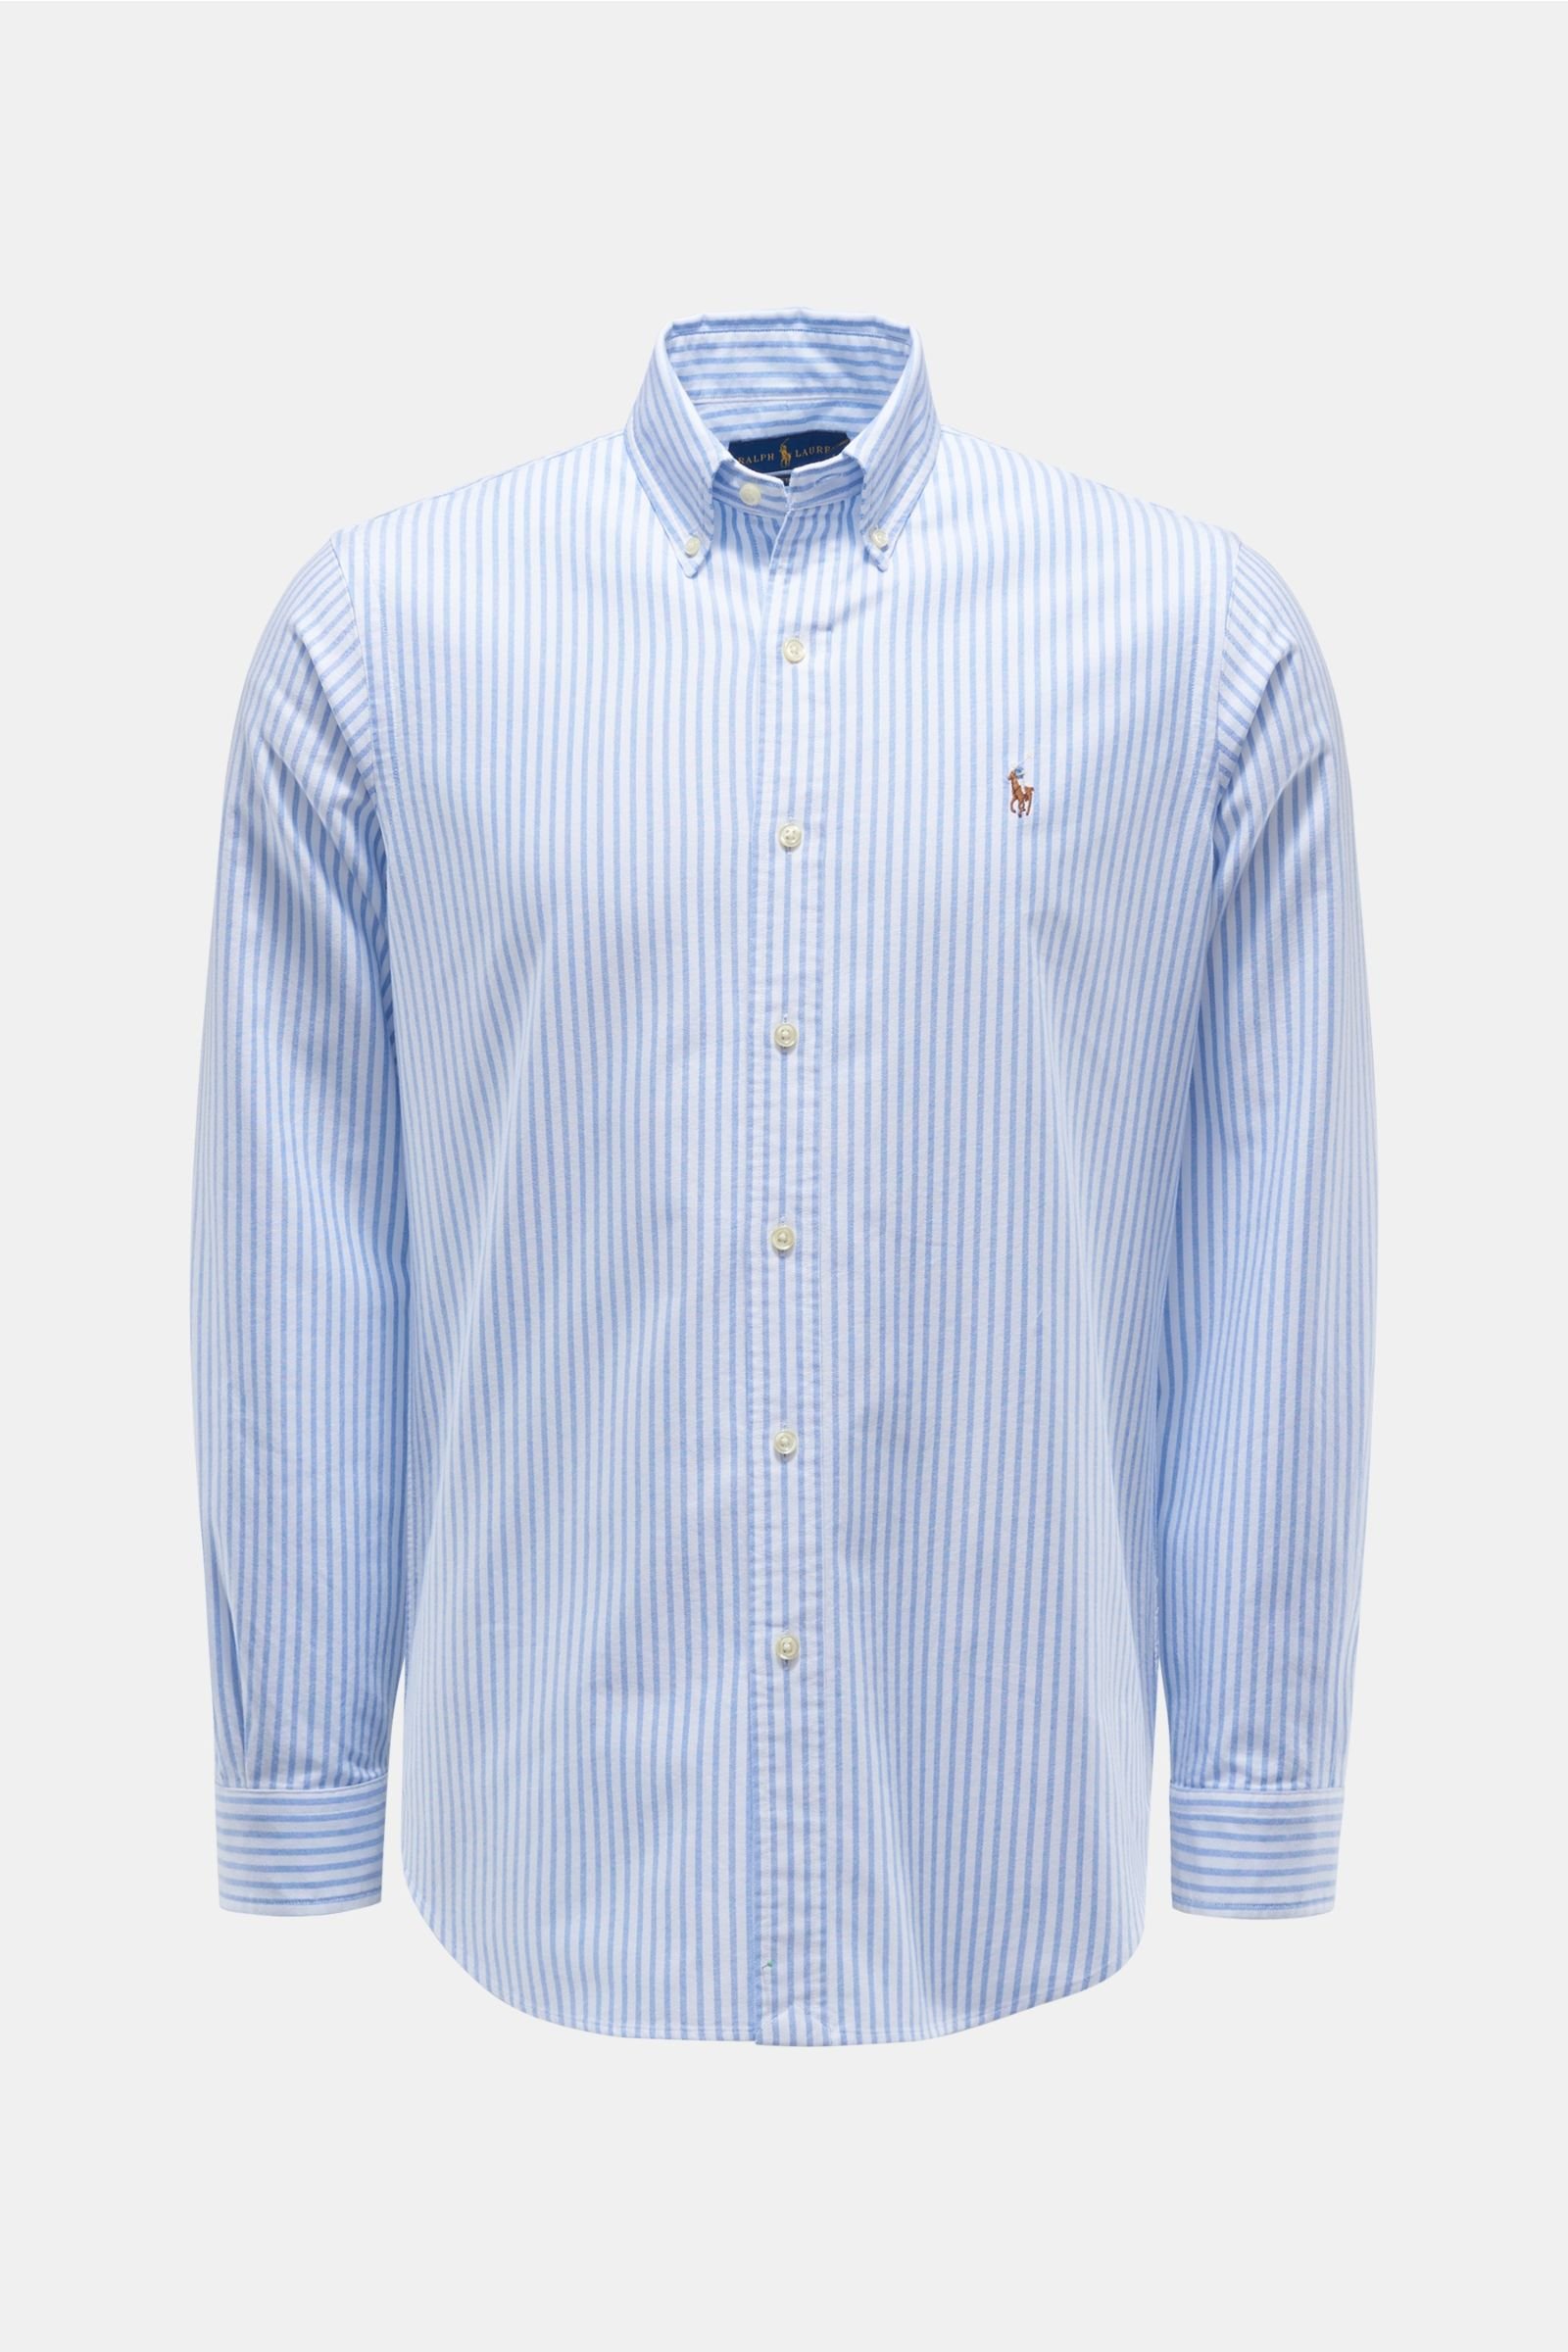 blue and white striped ralph lauren shirt